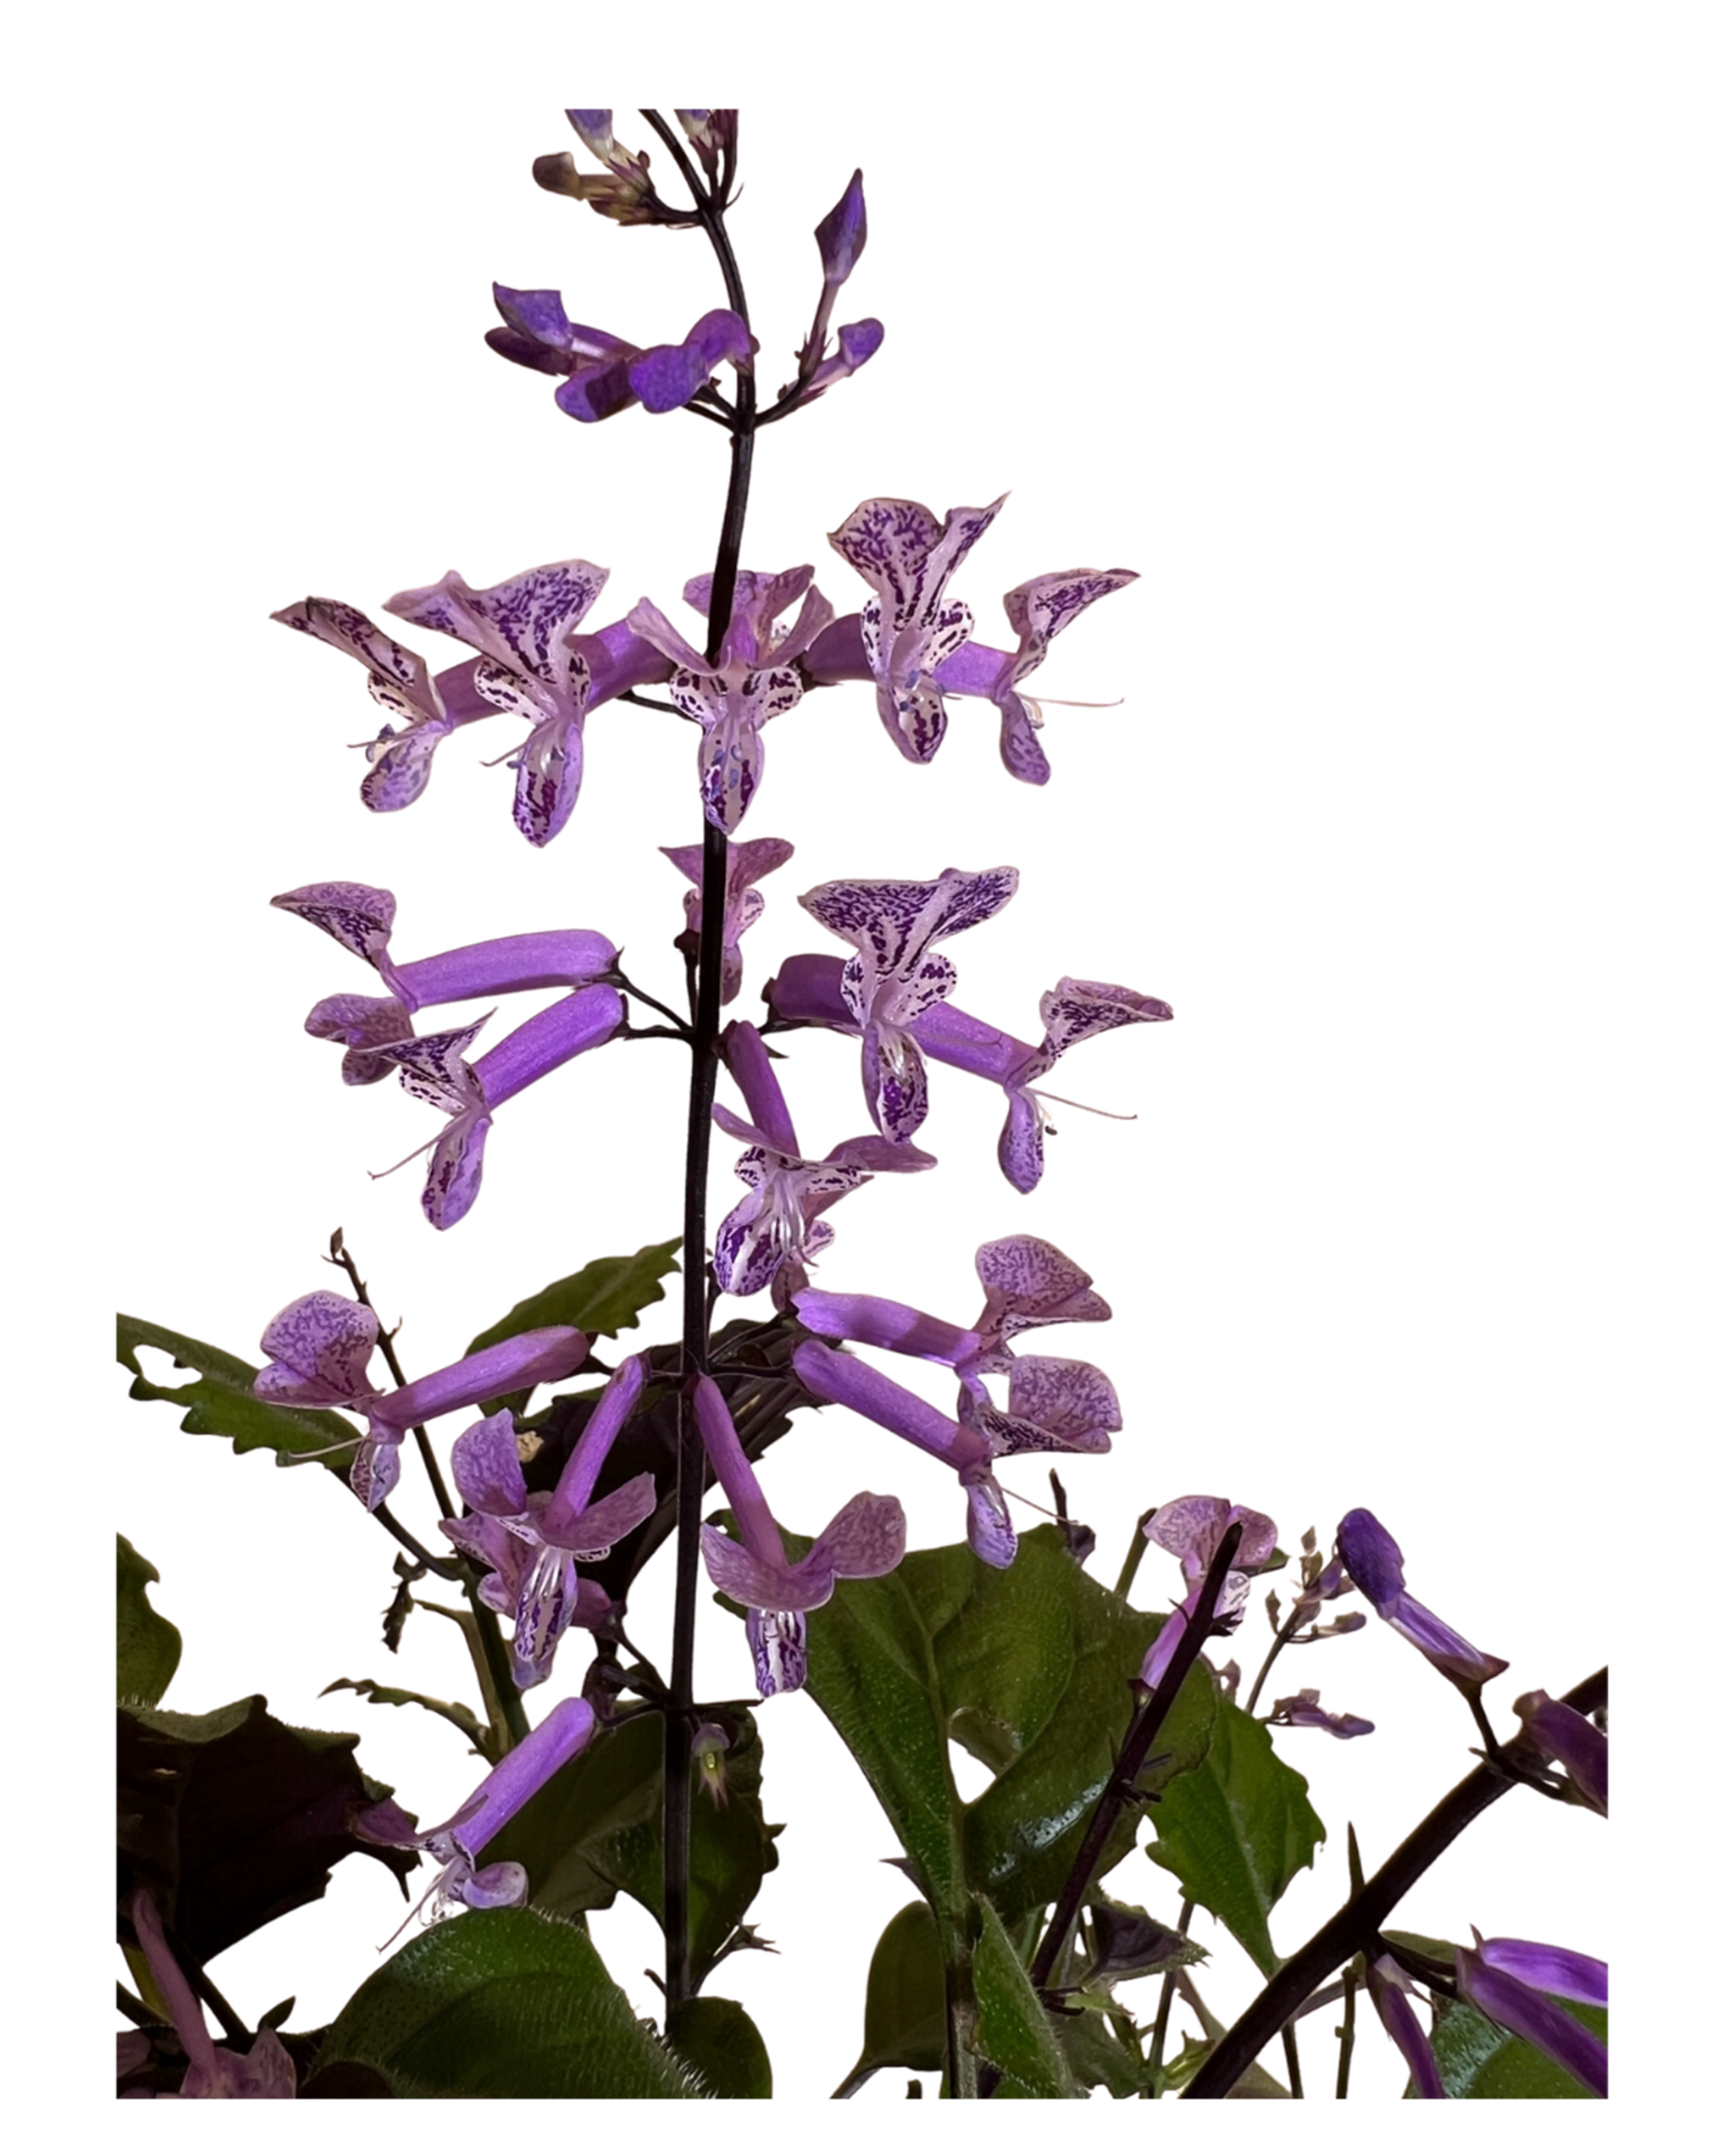 Mona Lavender - Plectranthus